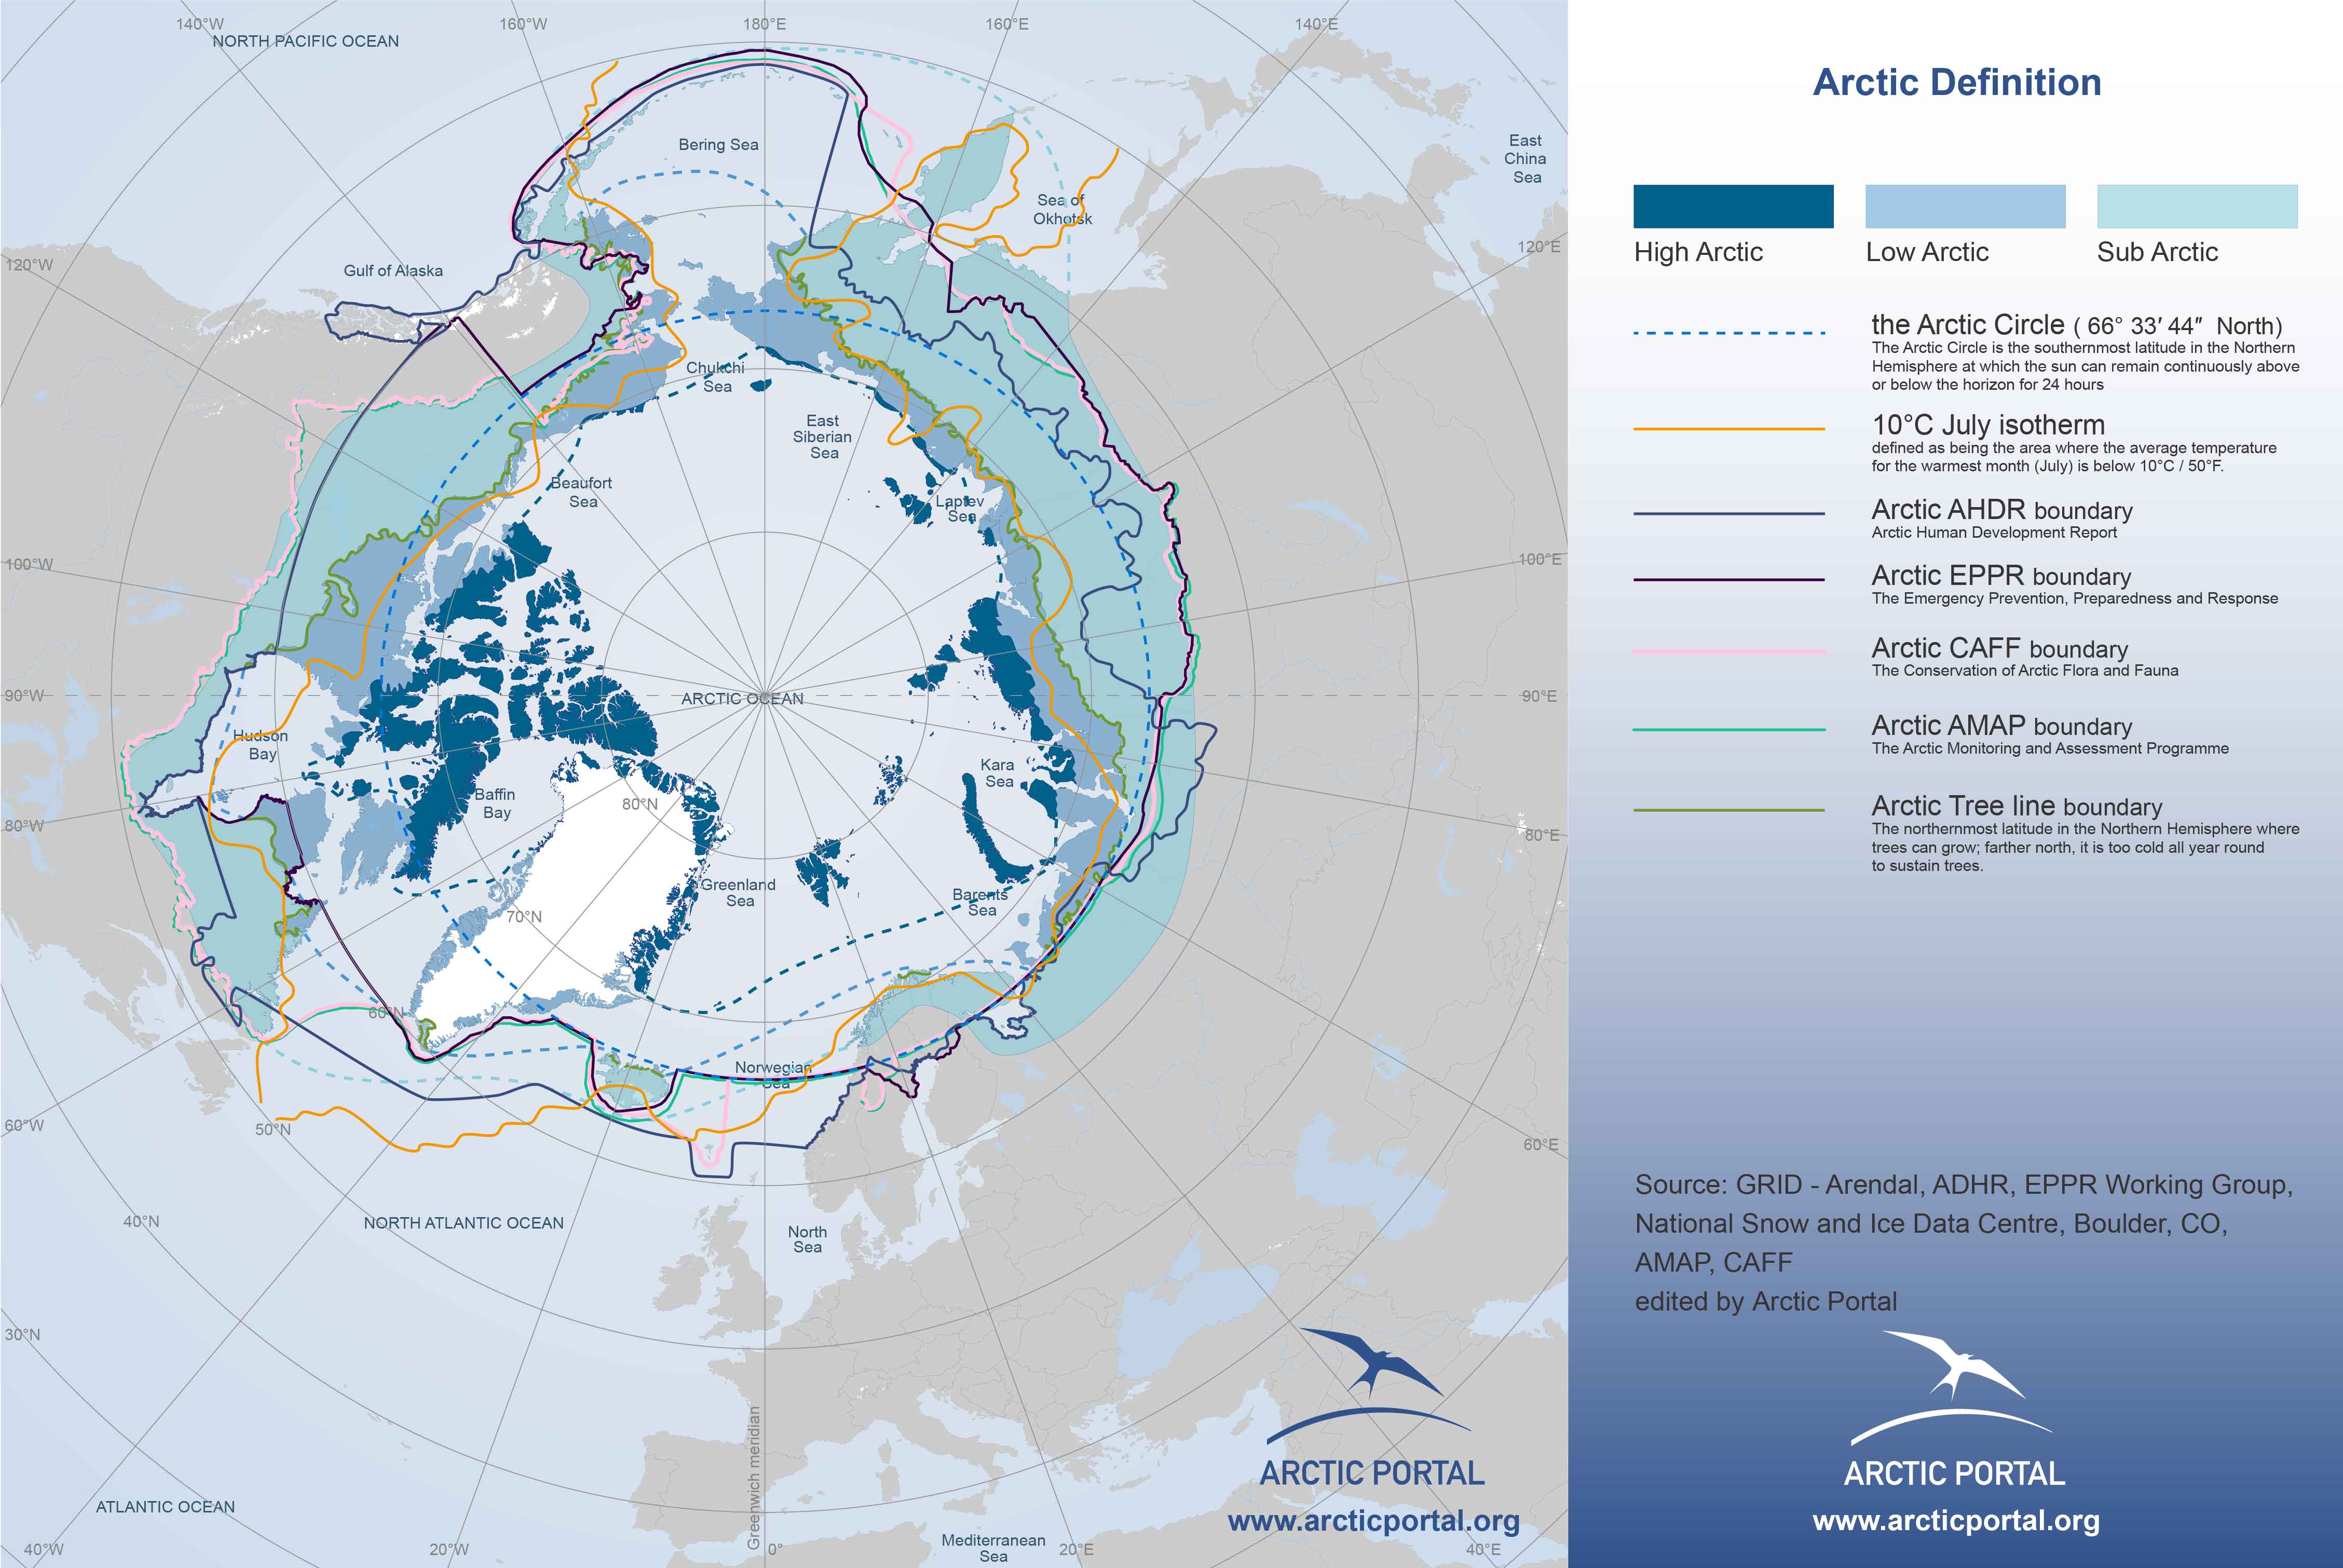 Main Definitions of the Arctic (map. Arctic Portal)